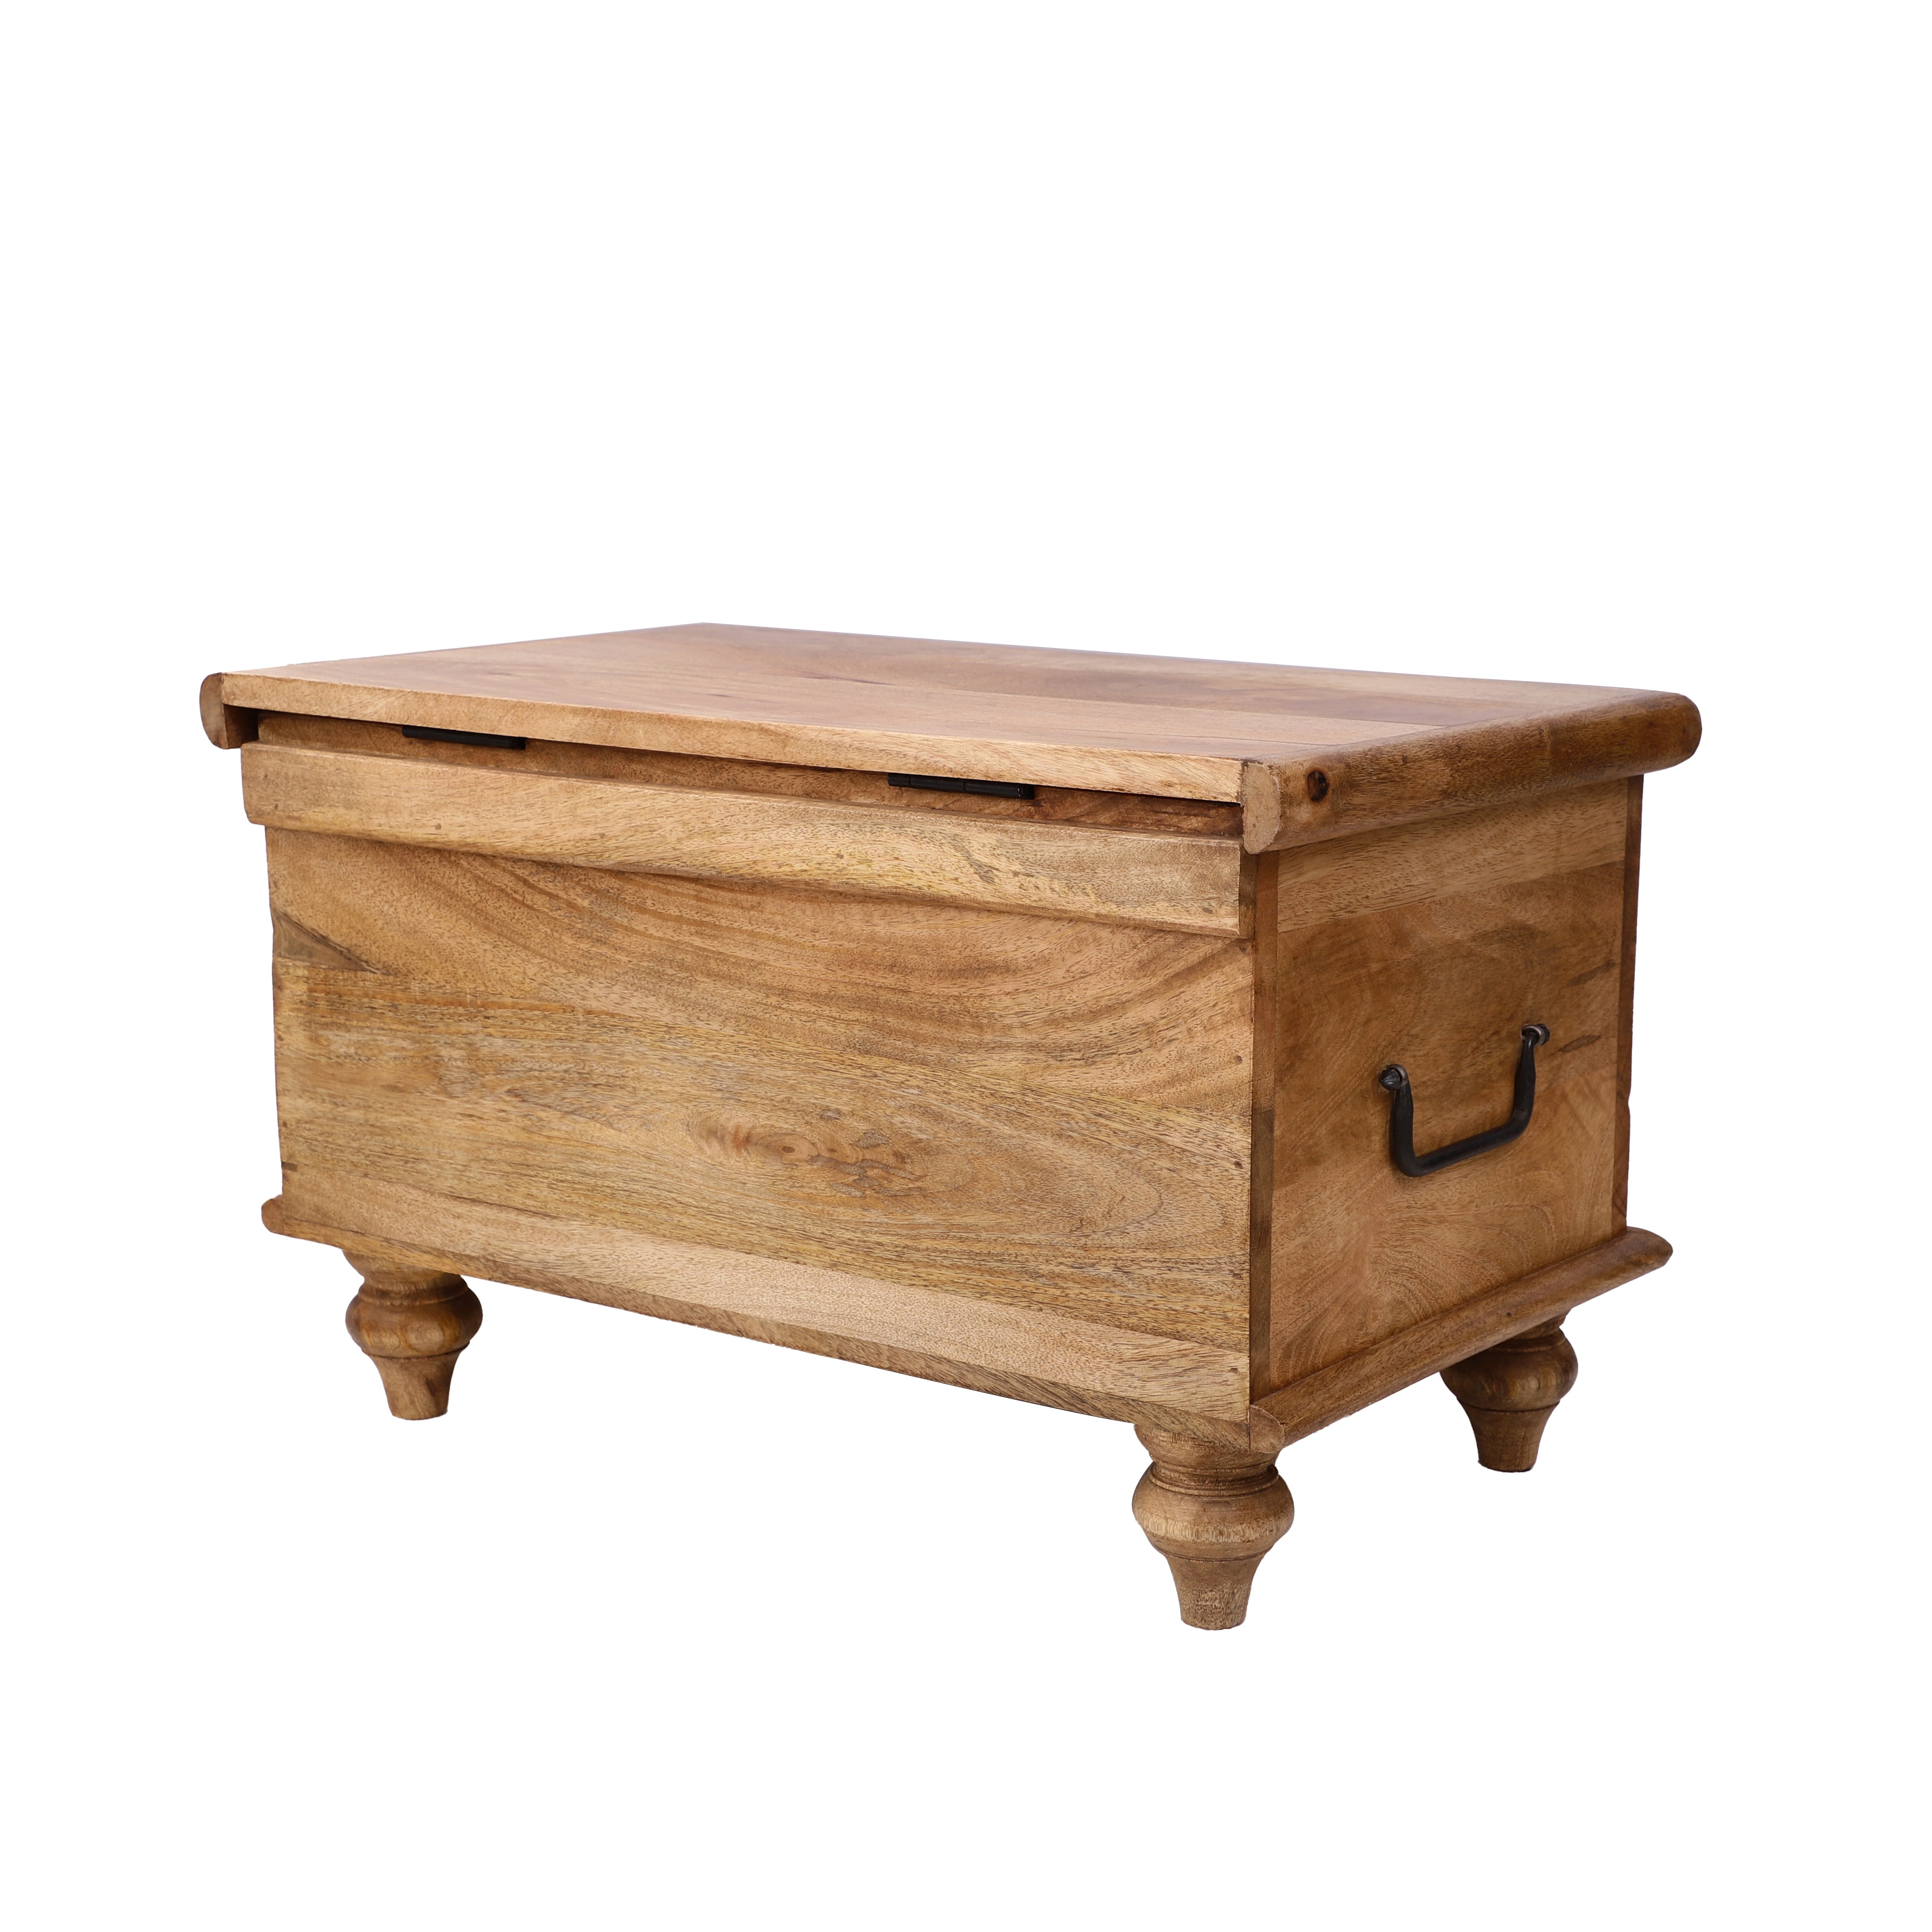 Carved Wooden Storage Box (White)